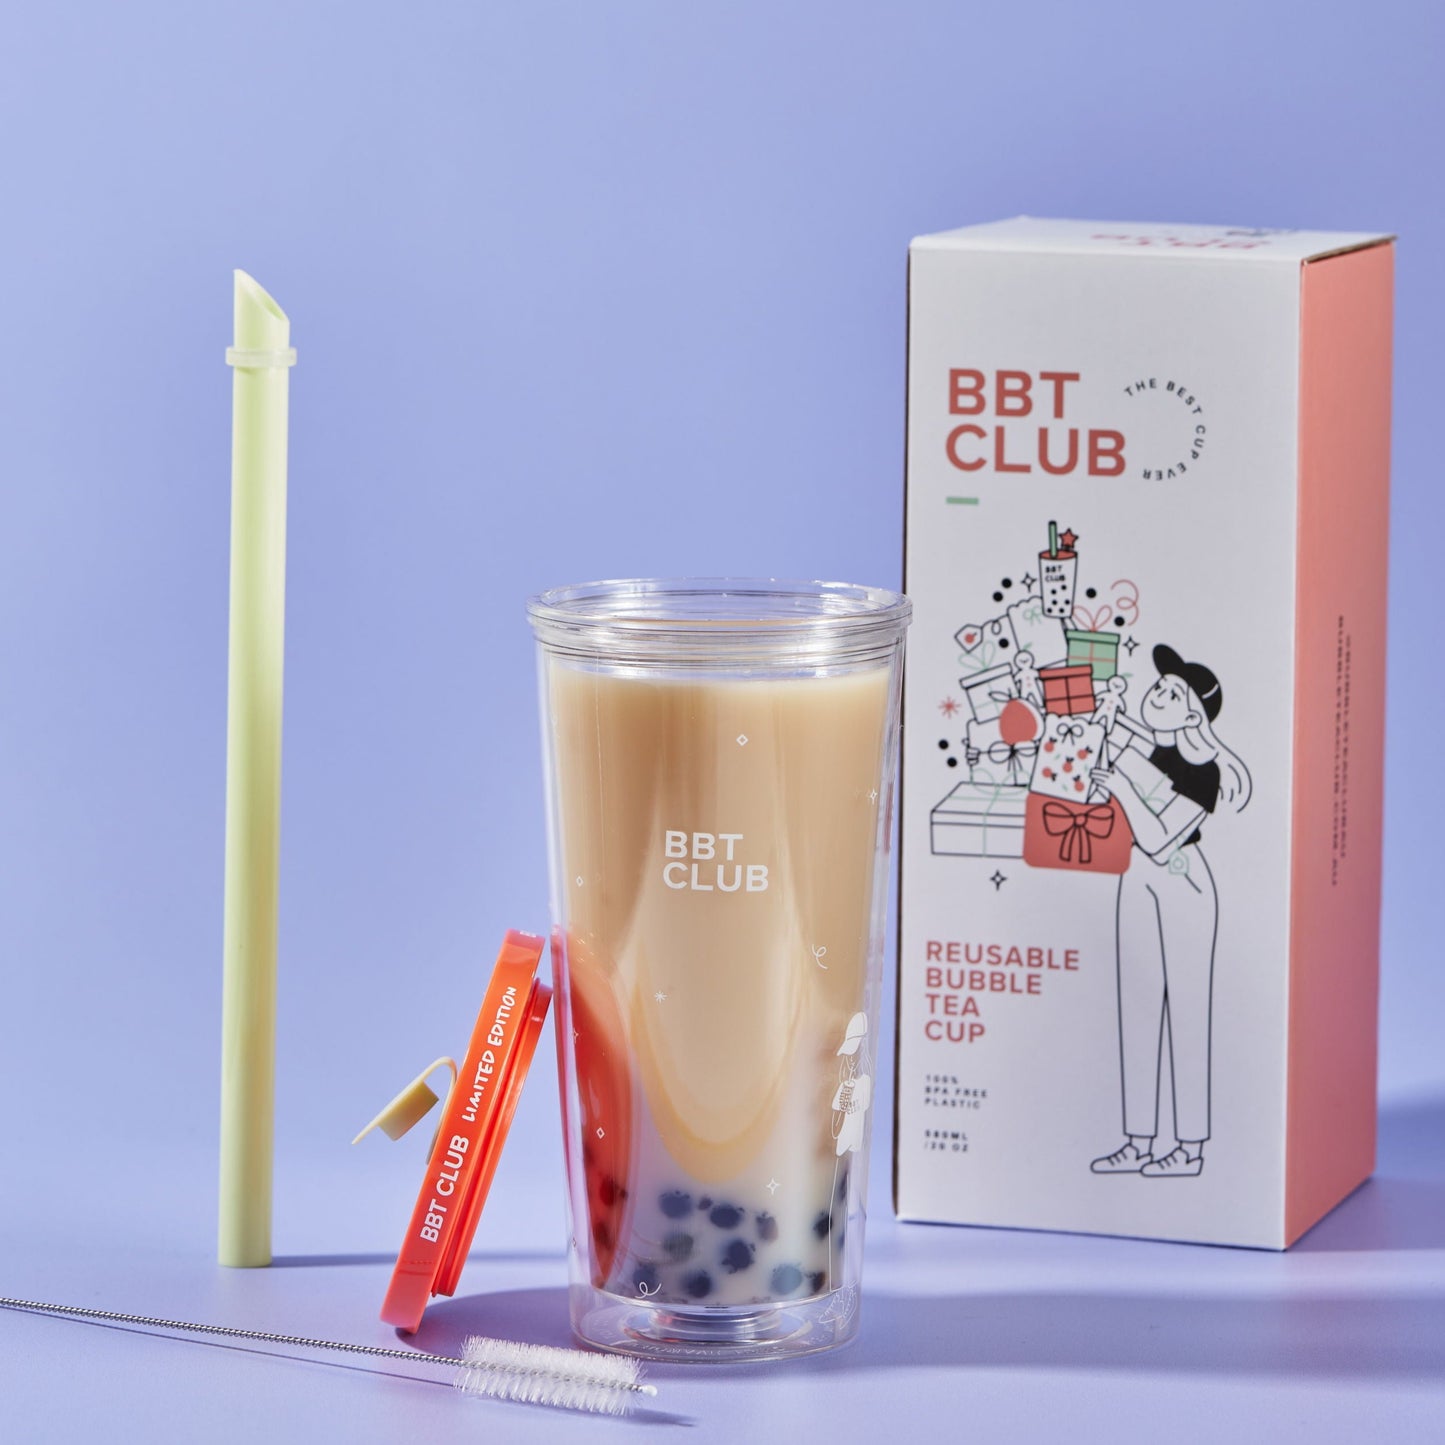 Limited Edition Summer Reusable Bubble Tea Cup